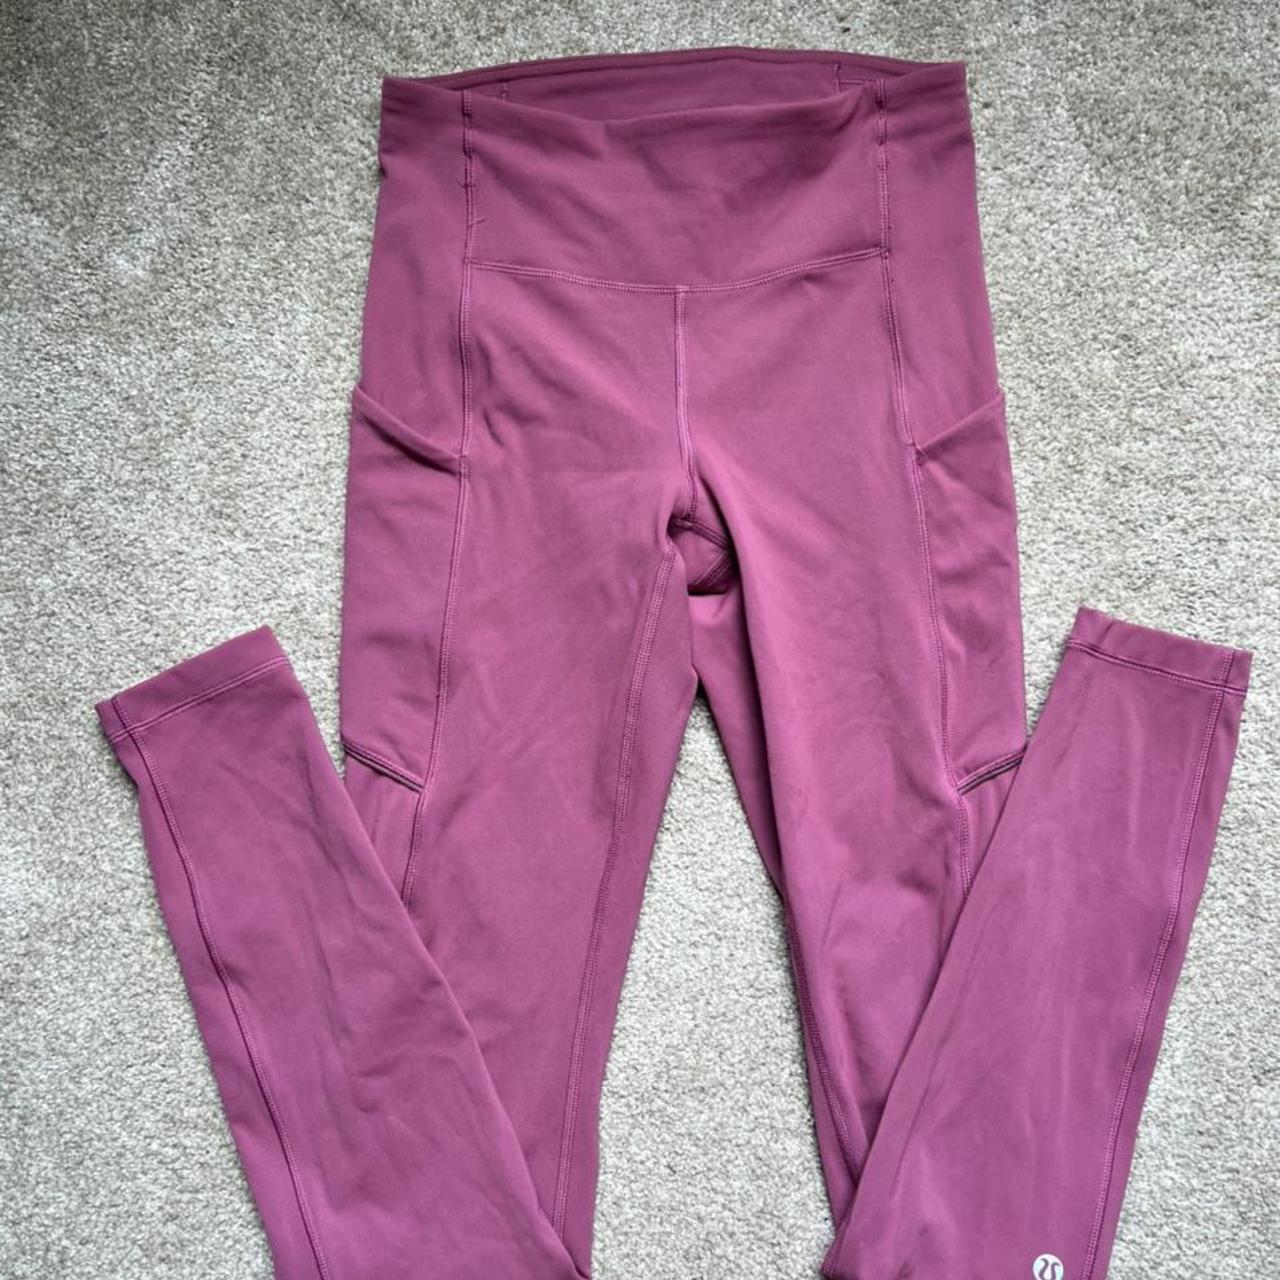 Pink lululemon leggings size 2 - Depop